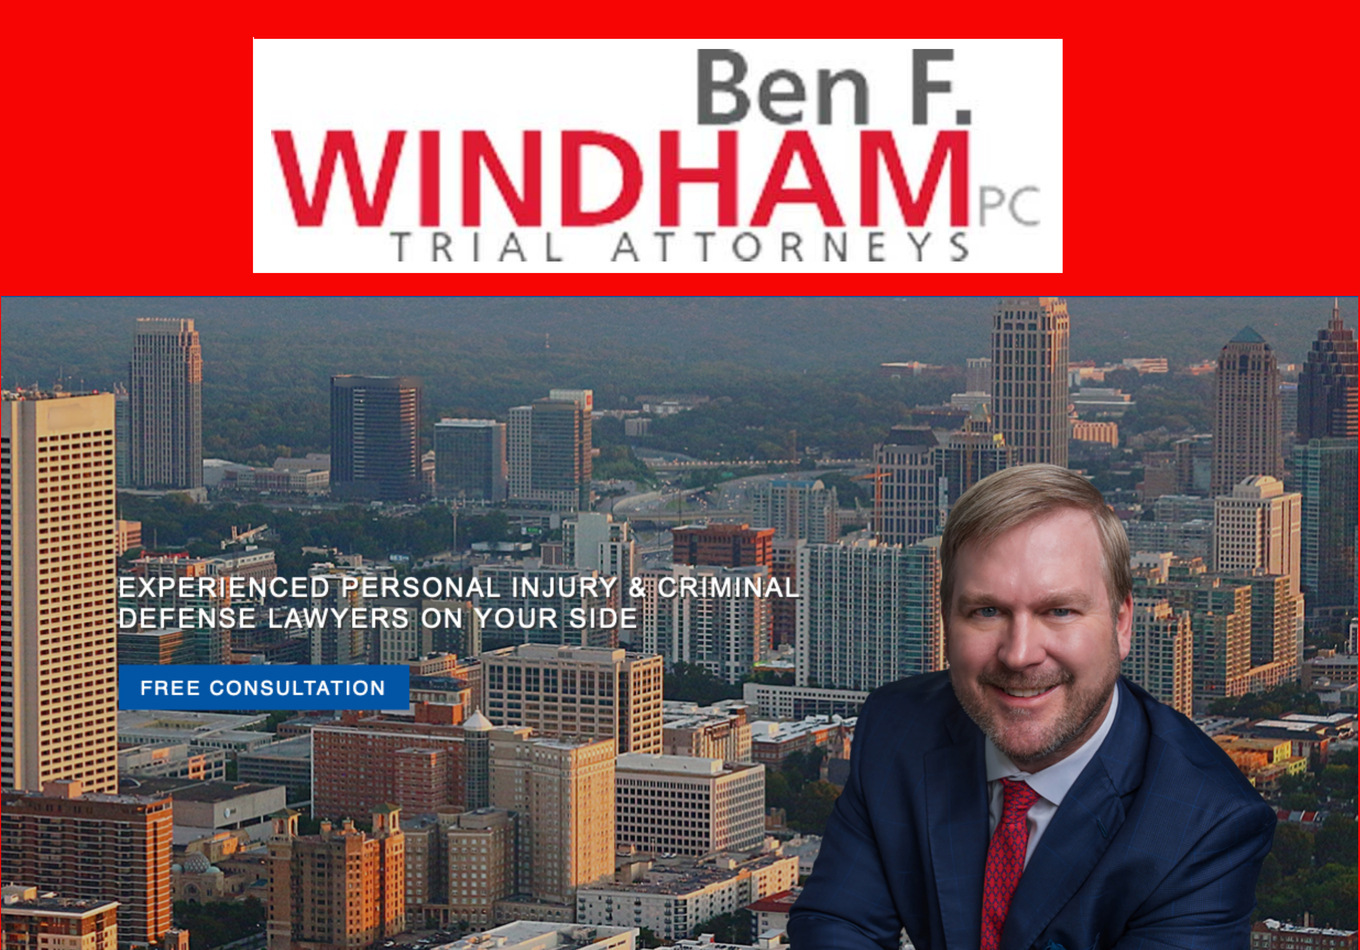 Ben F. Windham P.C., Monday, February 22, 2021, Press release picture